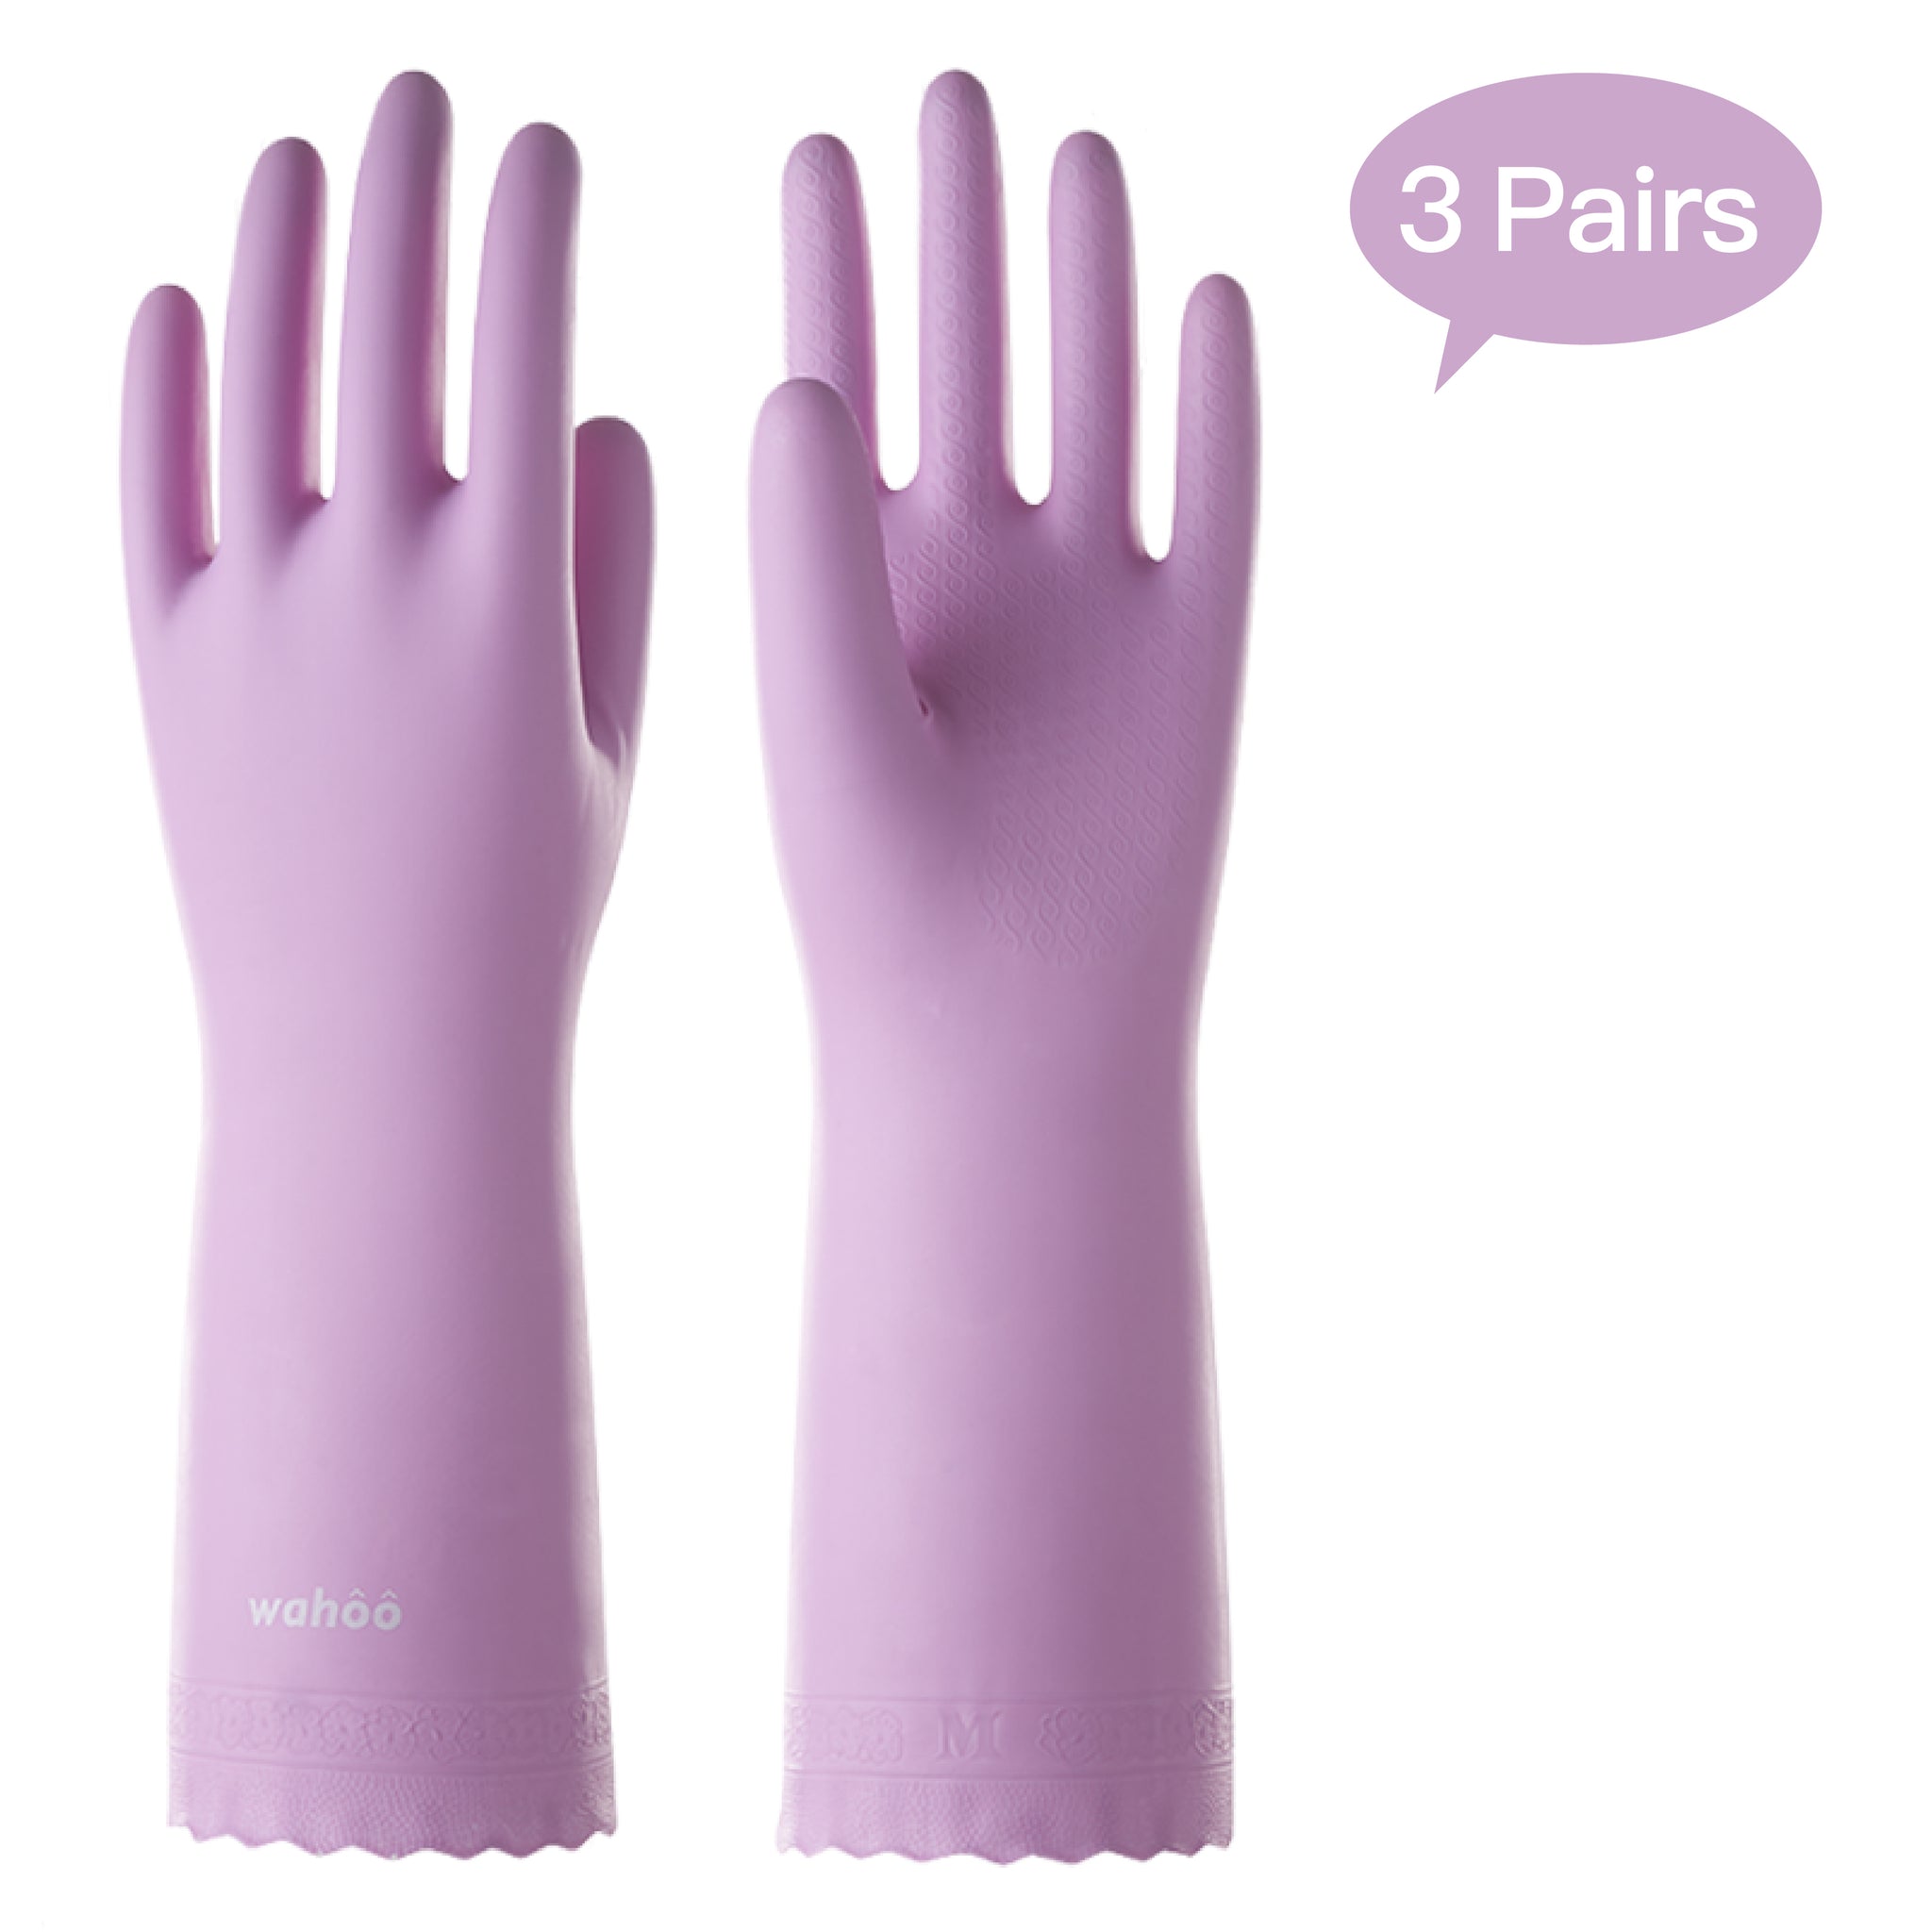 WF76 丨 Flocom Flocklined PVC Household Gloves 3 Pairs